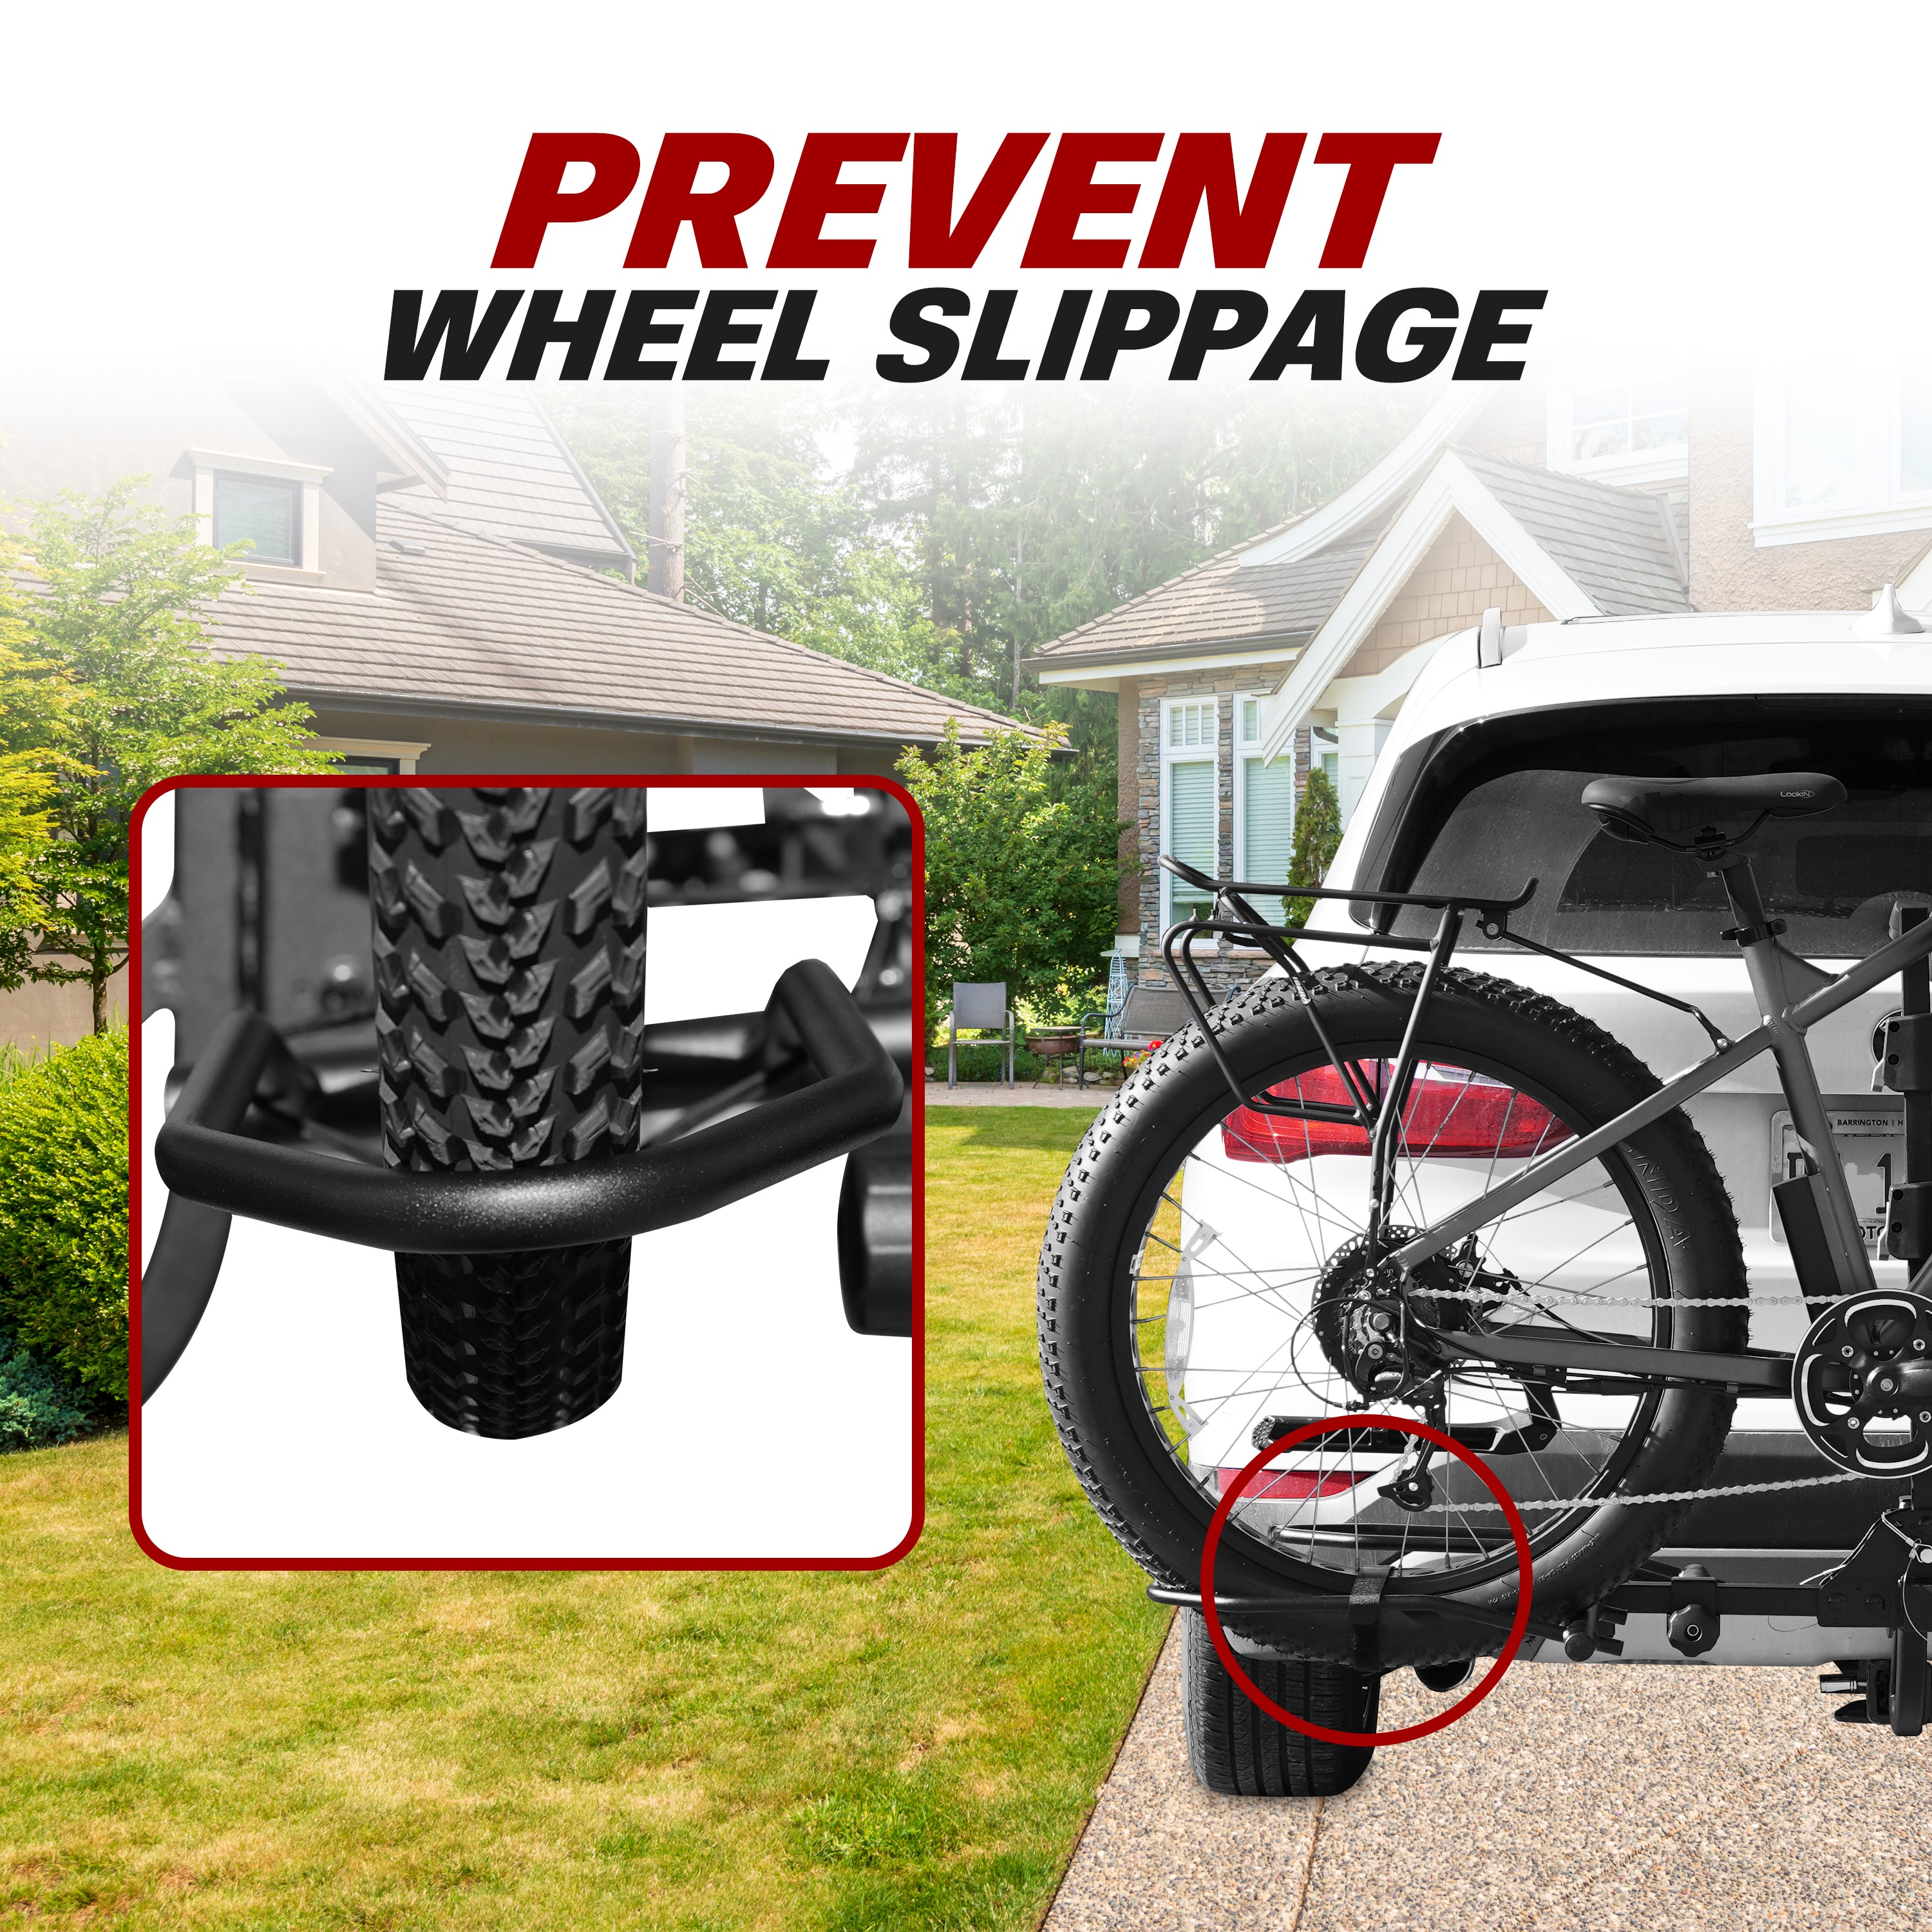 Prevent Wheel Slippage